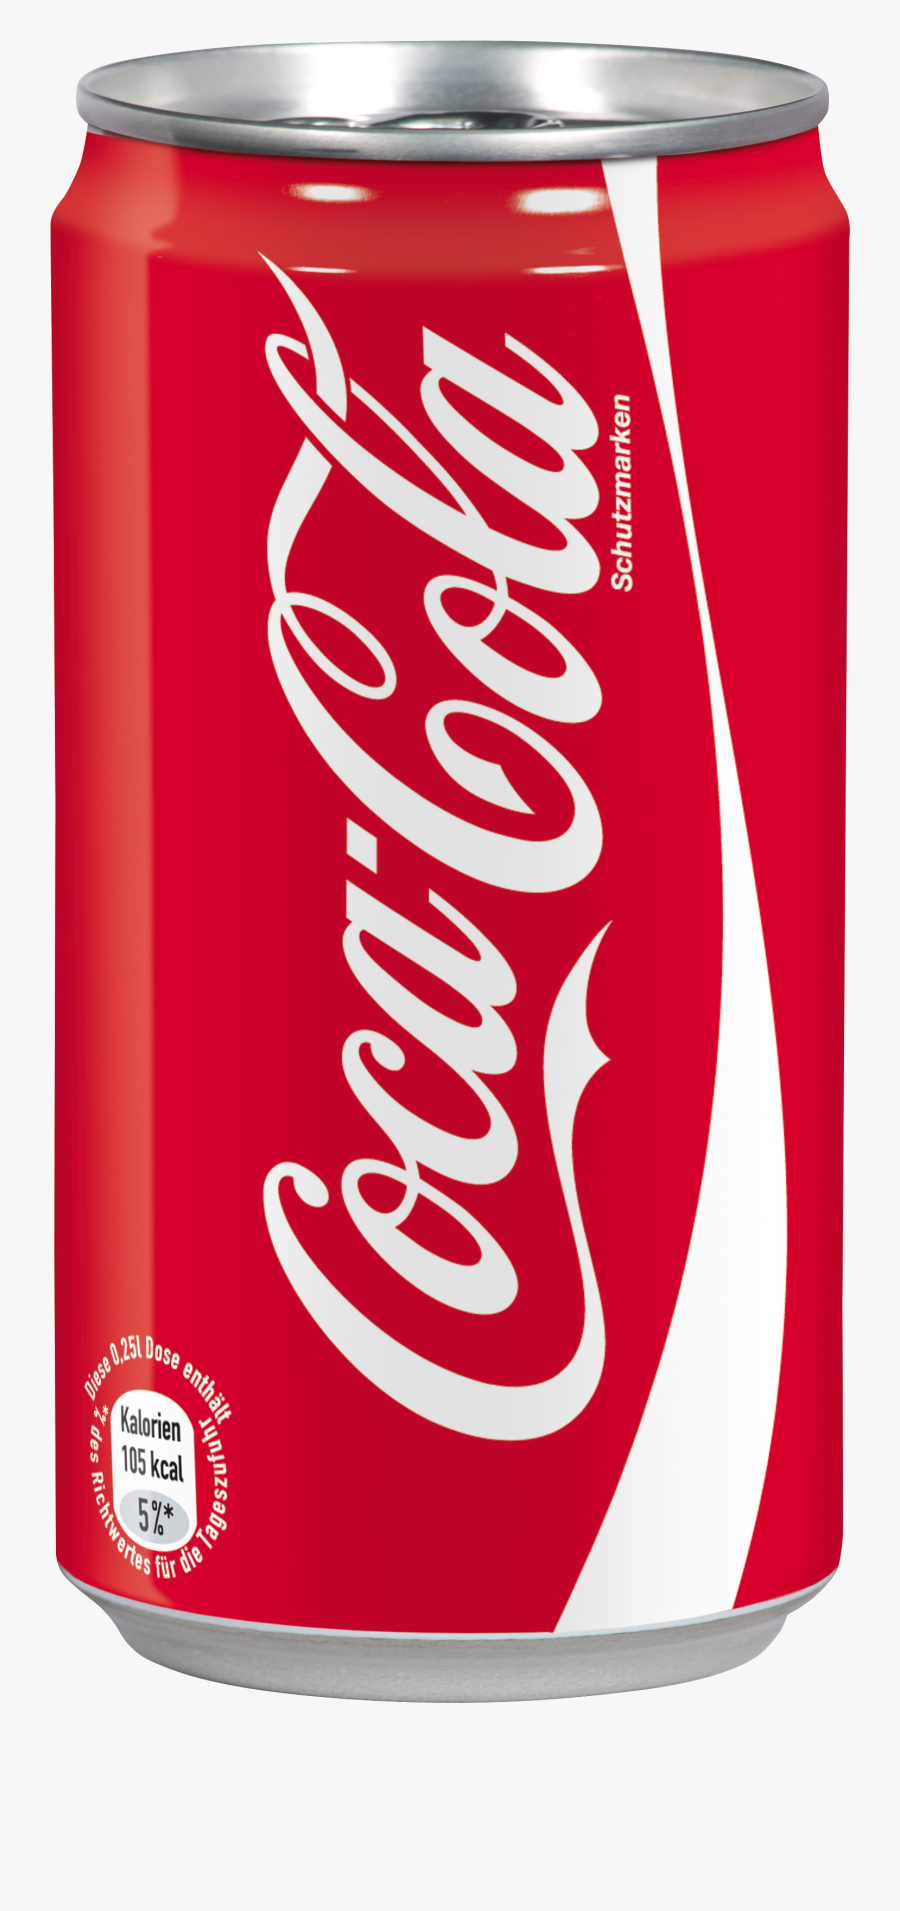 Coca Cola Bottle Png Image Download Free - Coca Cola, Transparent Clipart